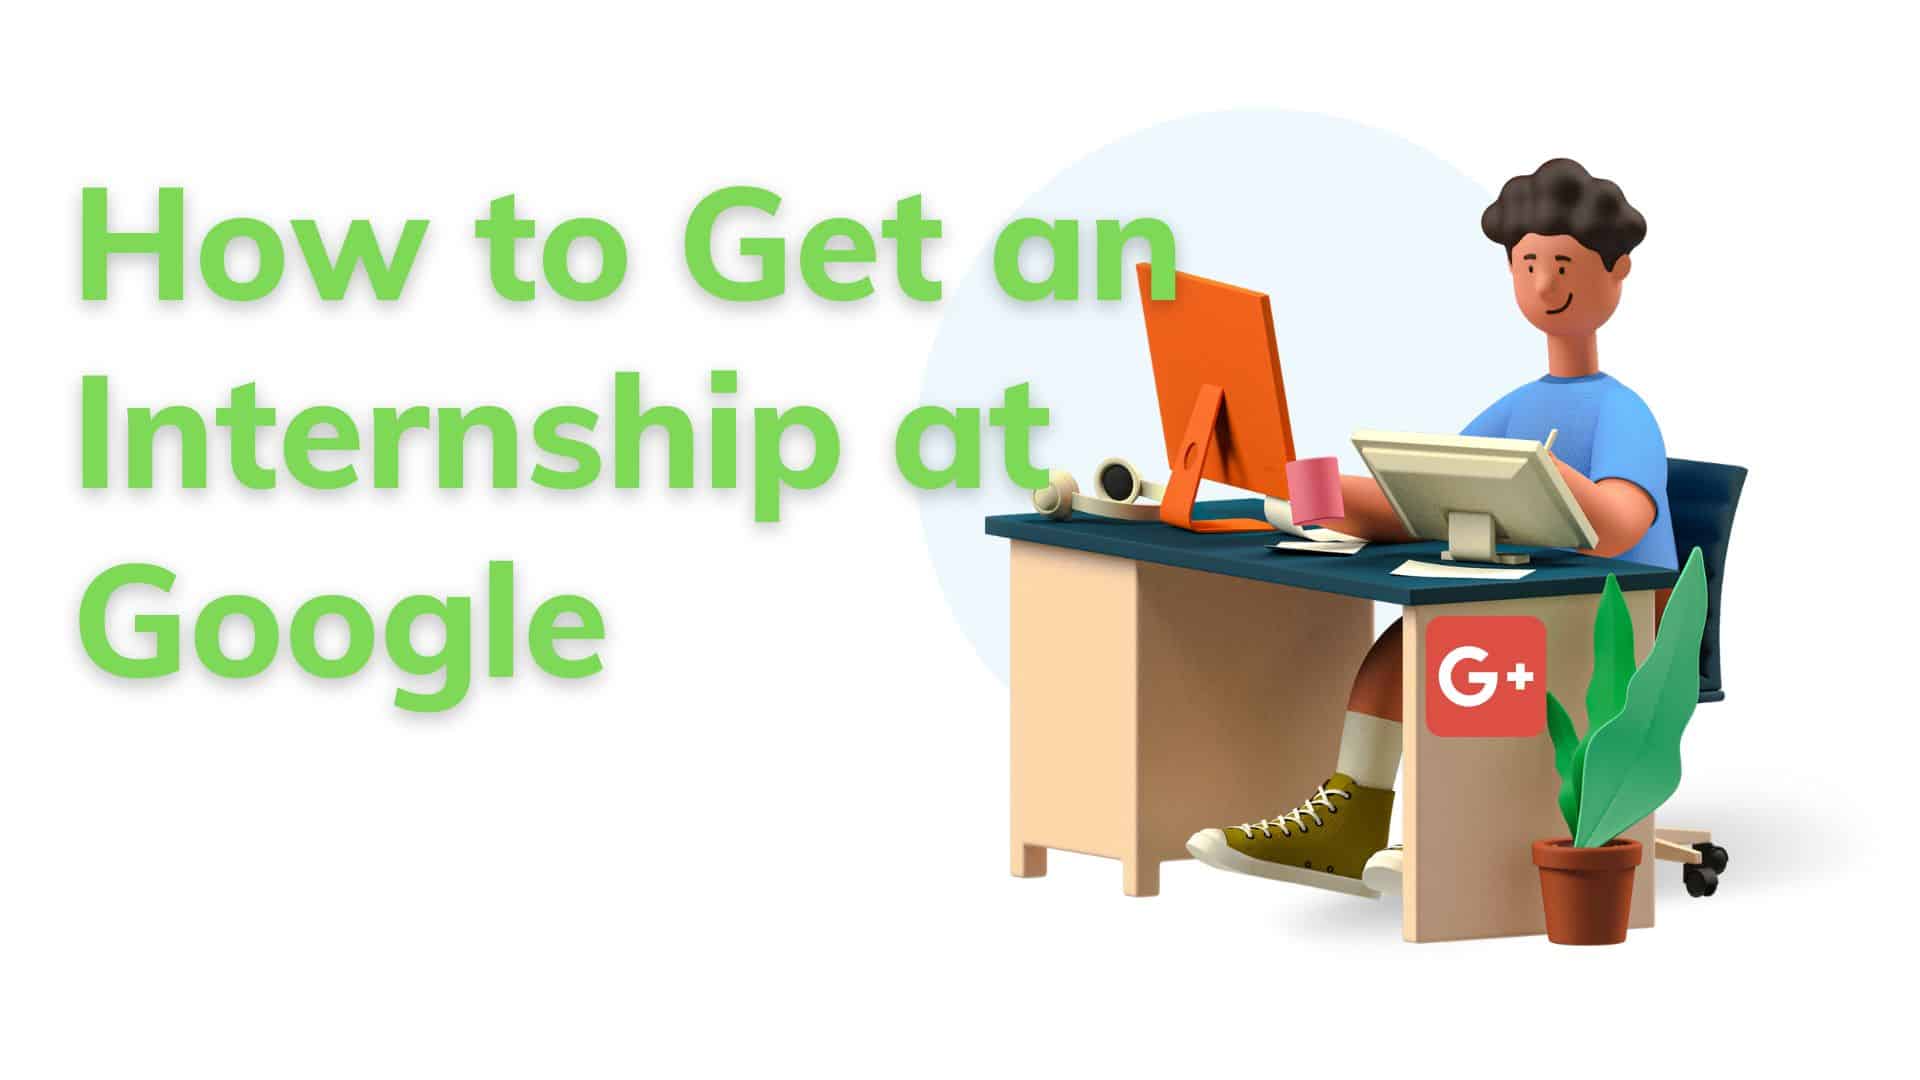 How to Get an Internship at Google